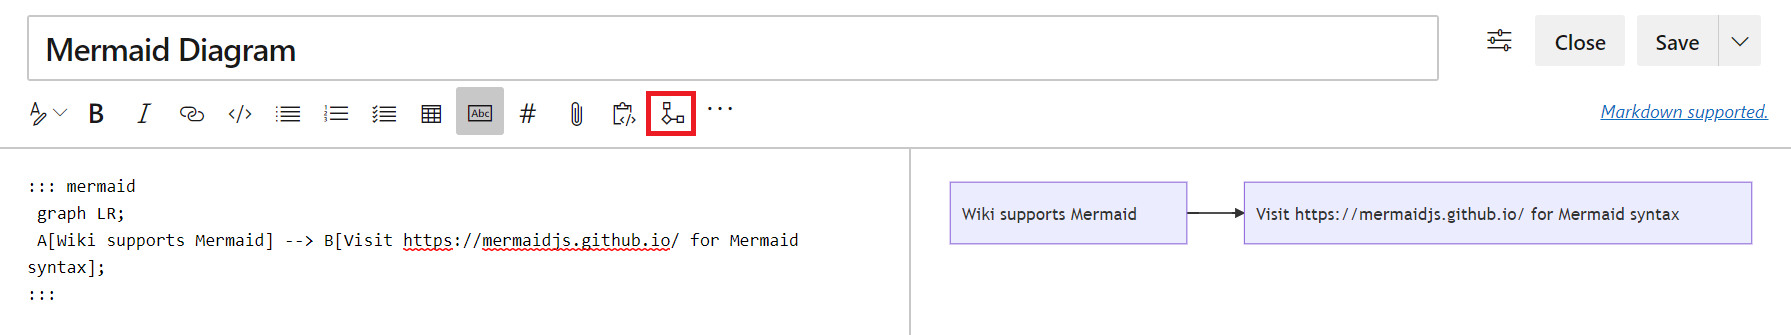 Mermaid diagram support in wiki.